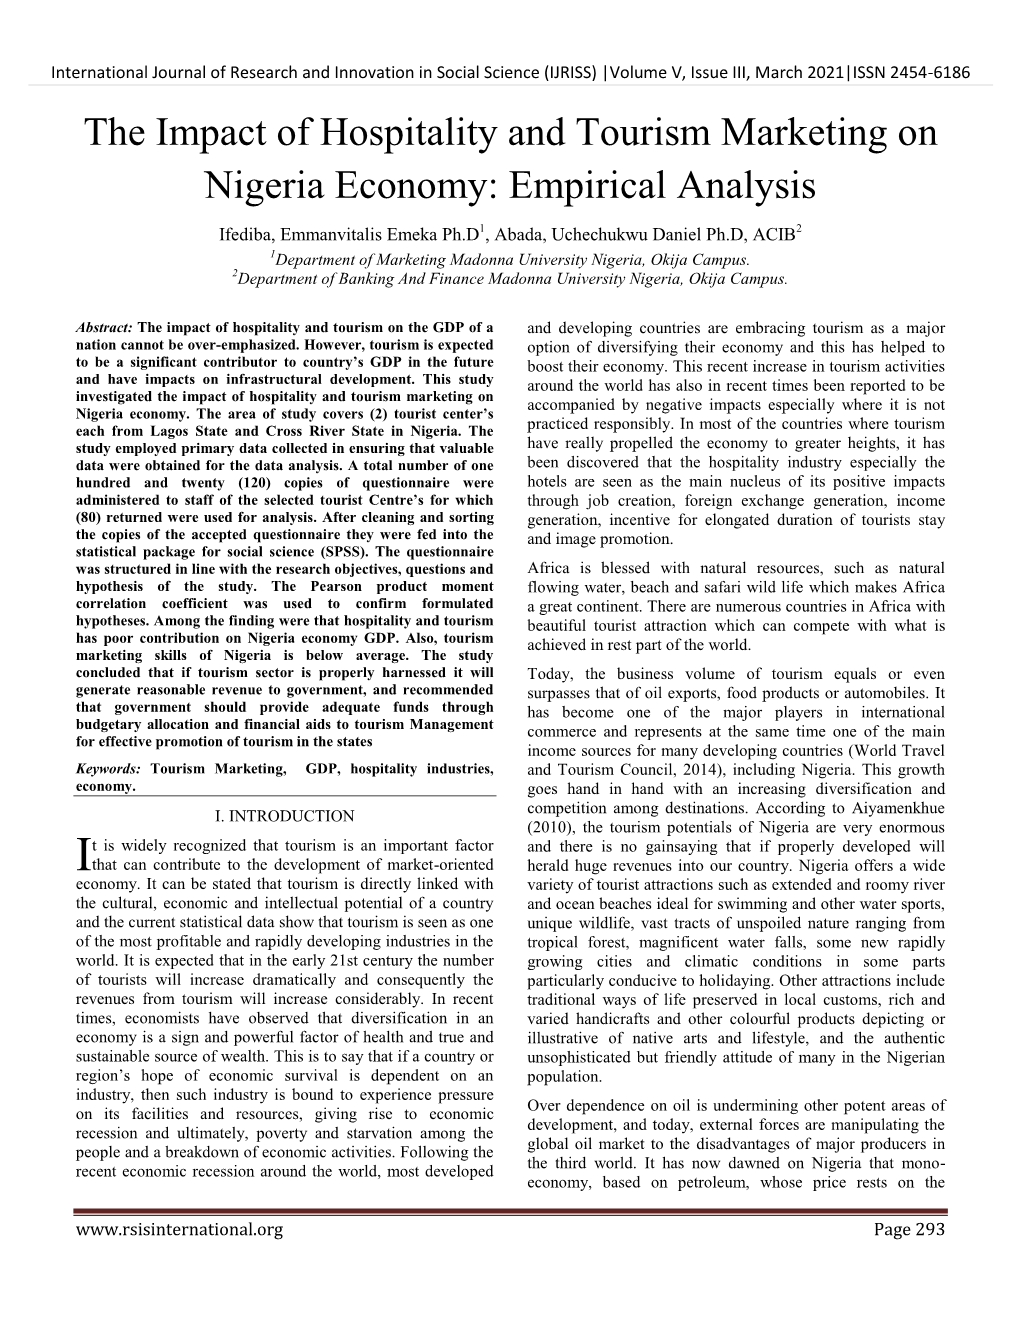 The Impact of Hospitality and Tourism Marketing on Nigeria Economy: Empirical Analysis